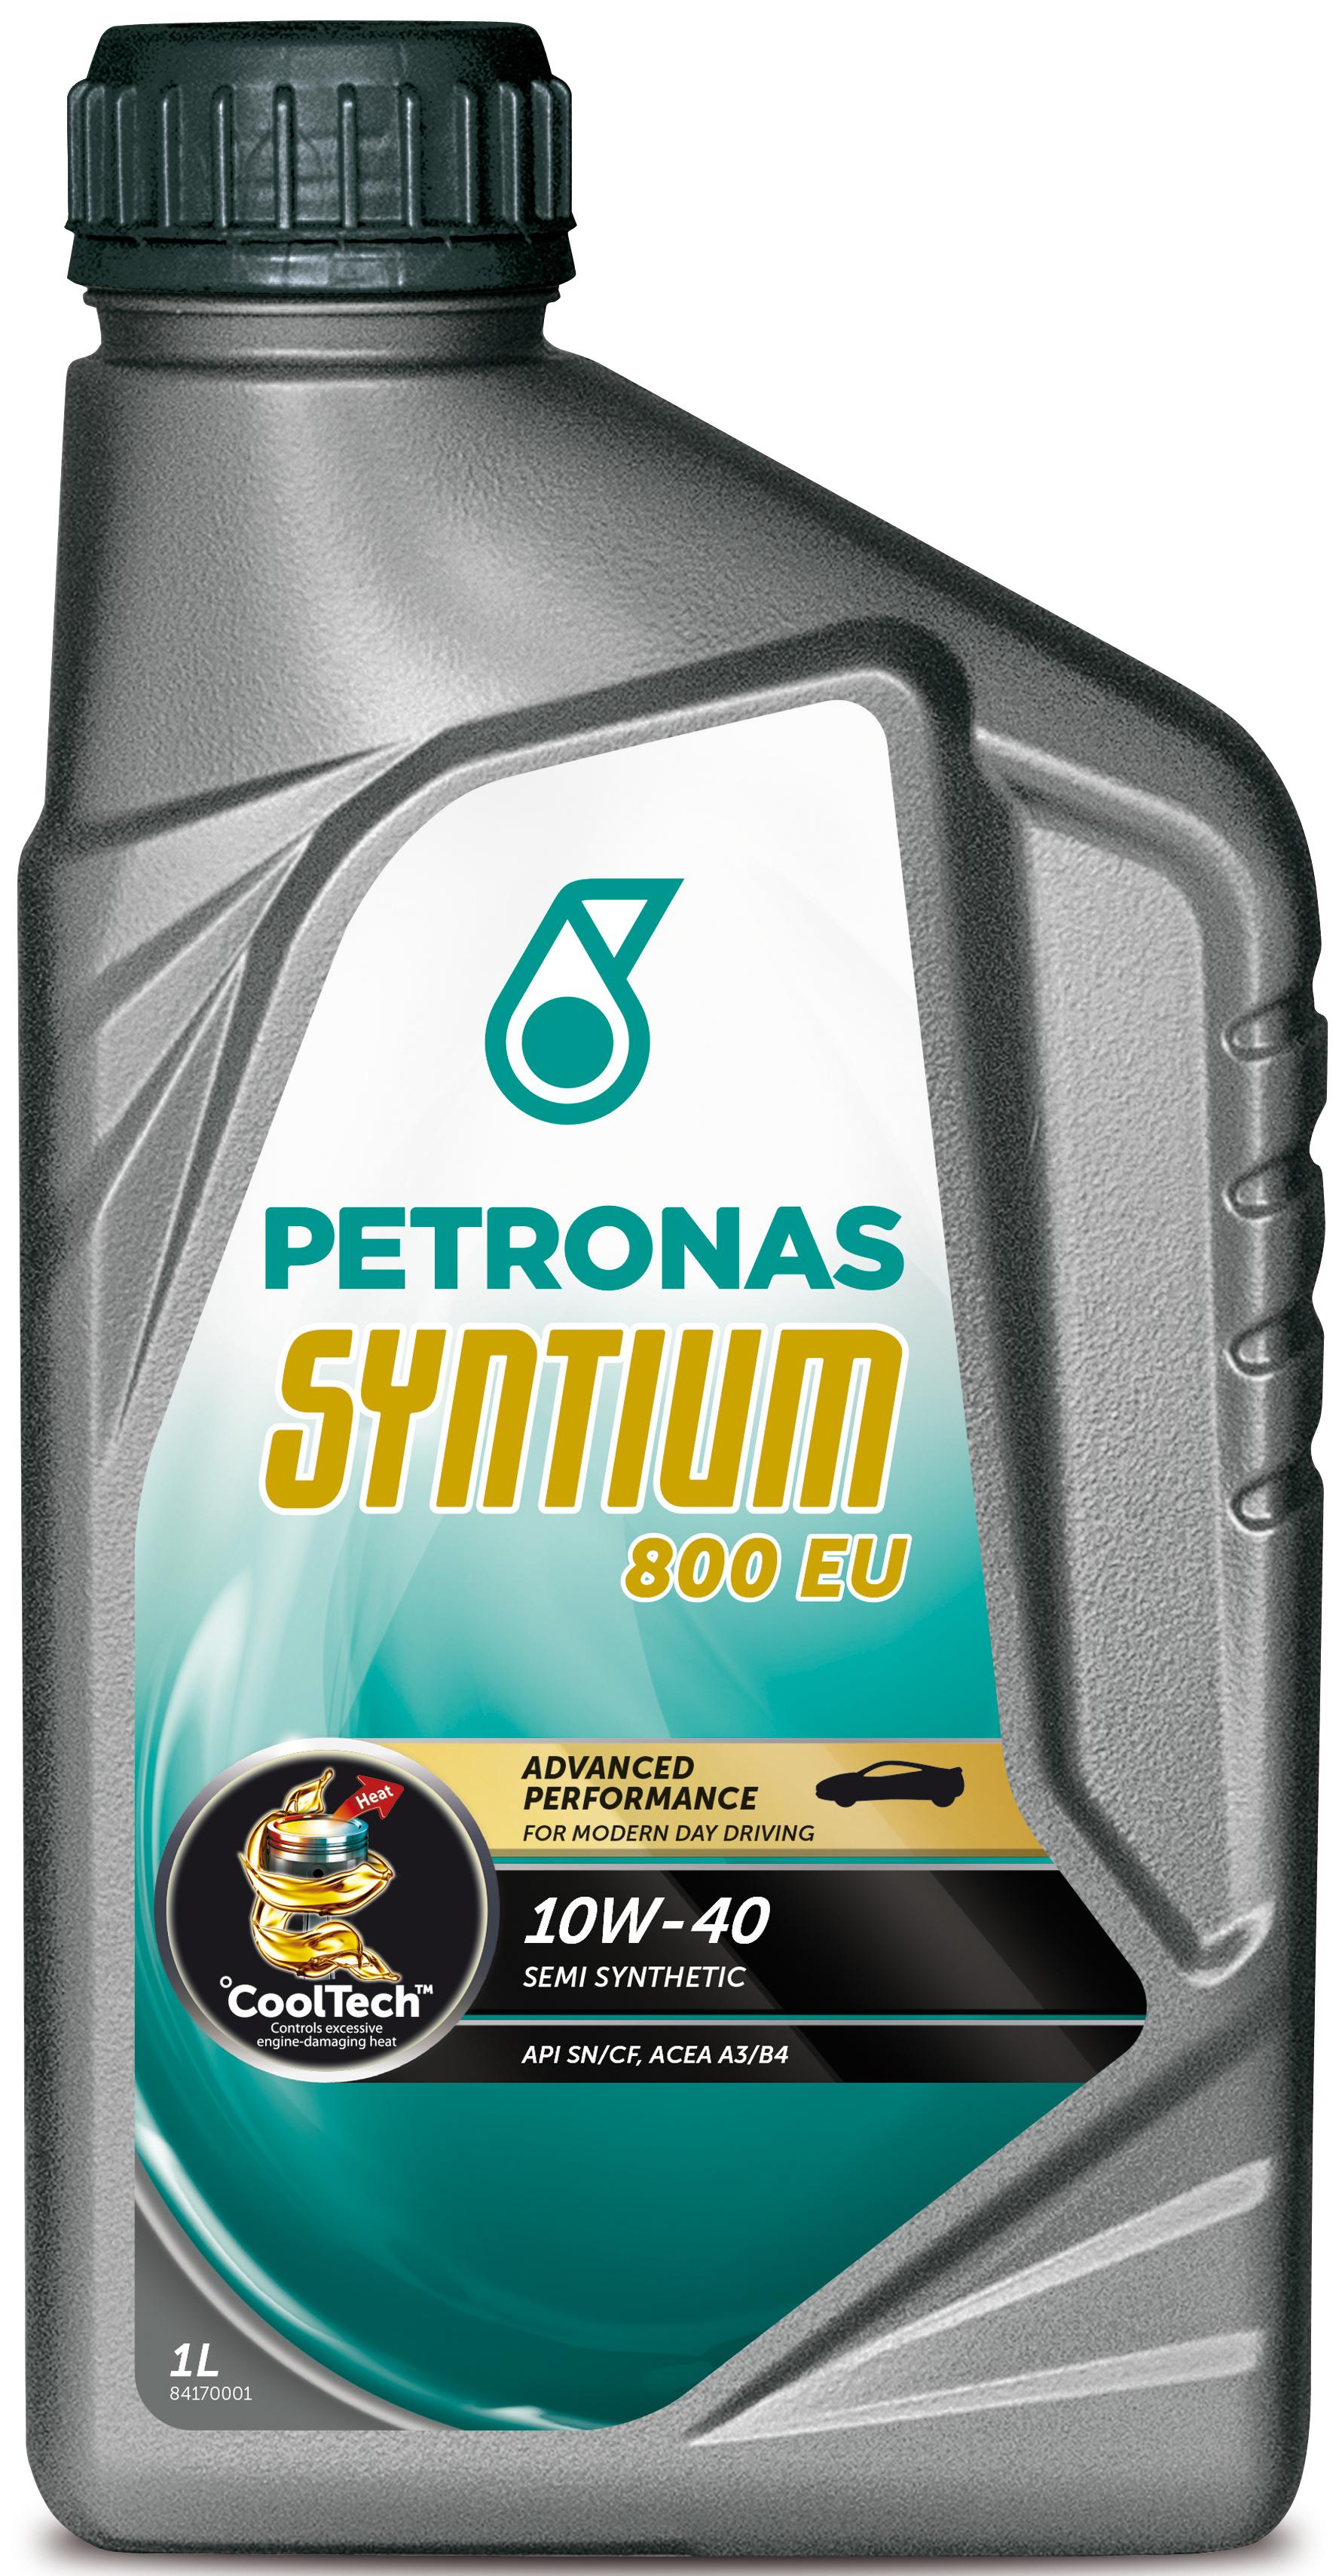 Petronas Syntium 800 Eu 10W-40 Oil 1L